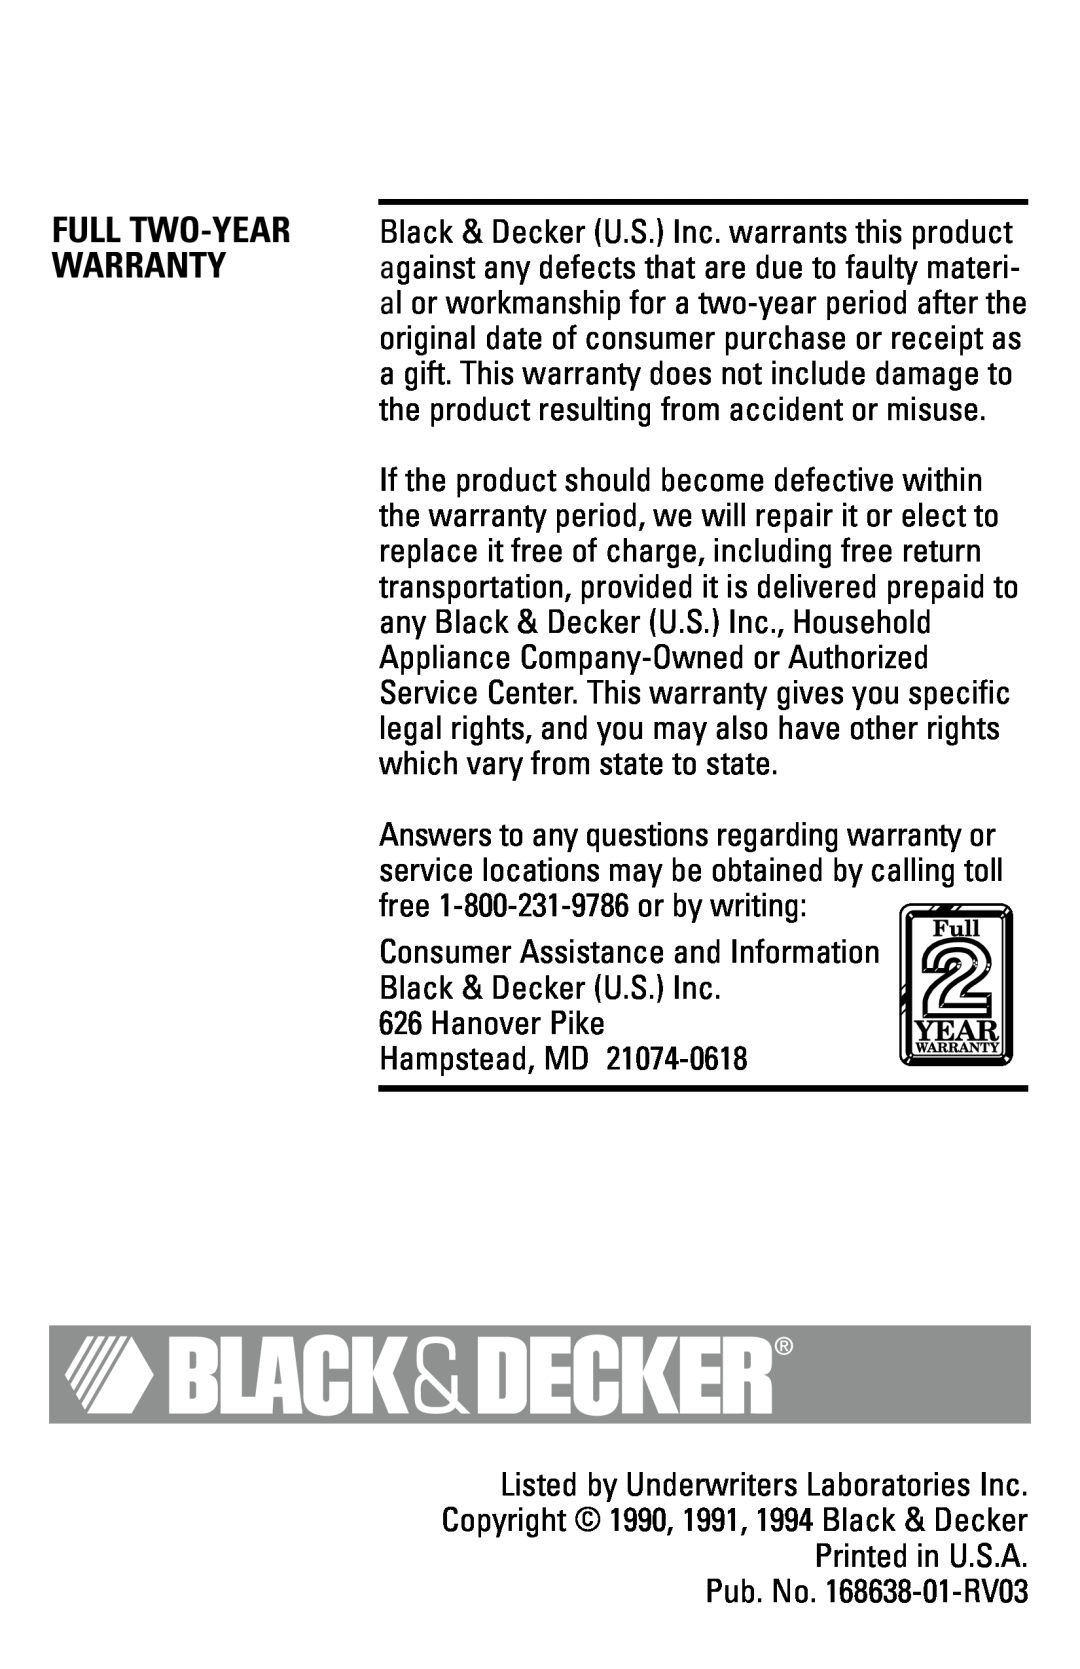 Black & Decker DCM12WH manual Consumer Assistance and Information, Black & Decker U.S. Inc 626 Hanover Pike, Hampstead, MD 